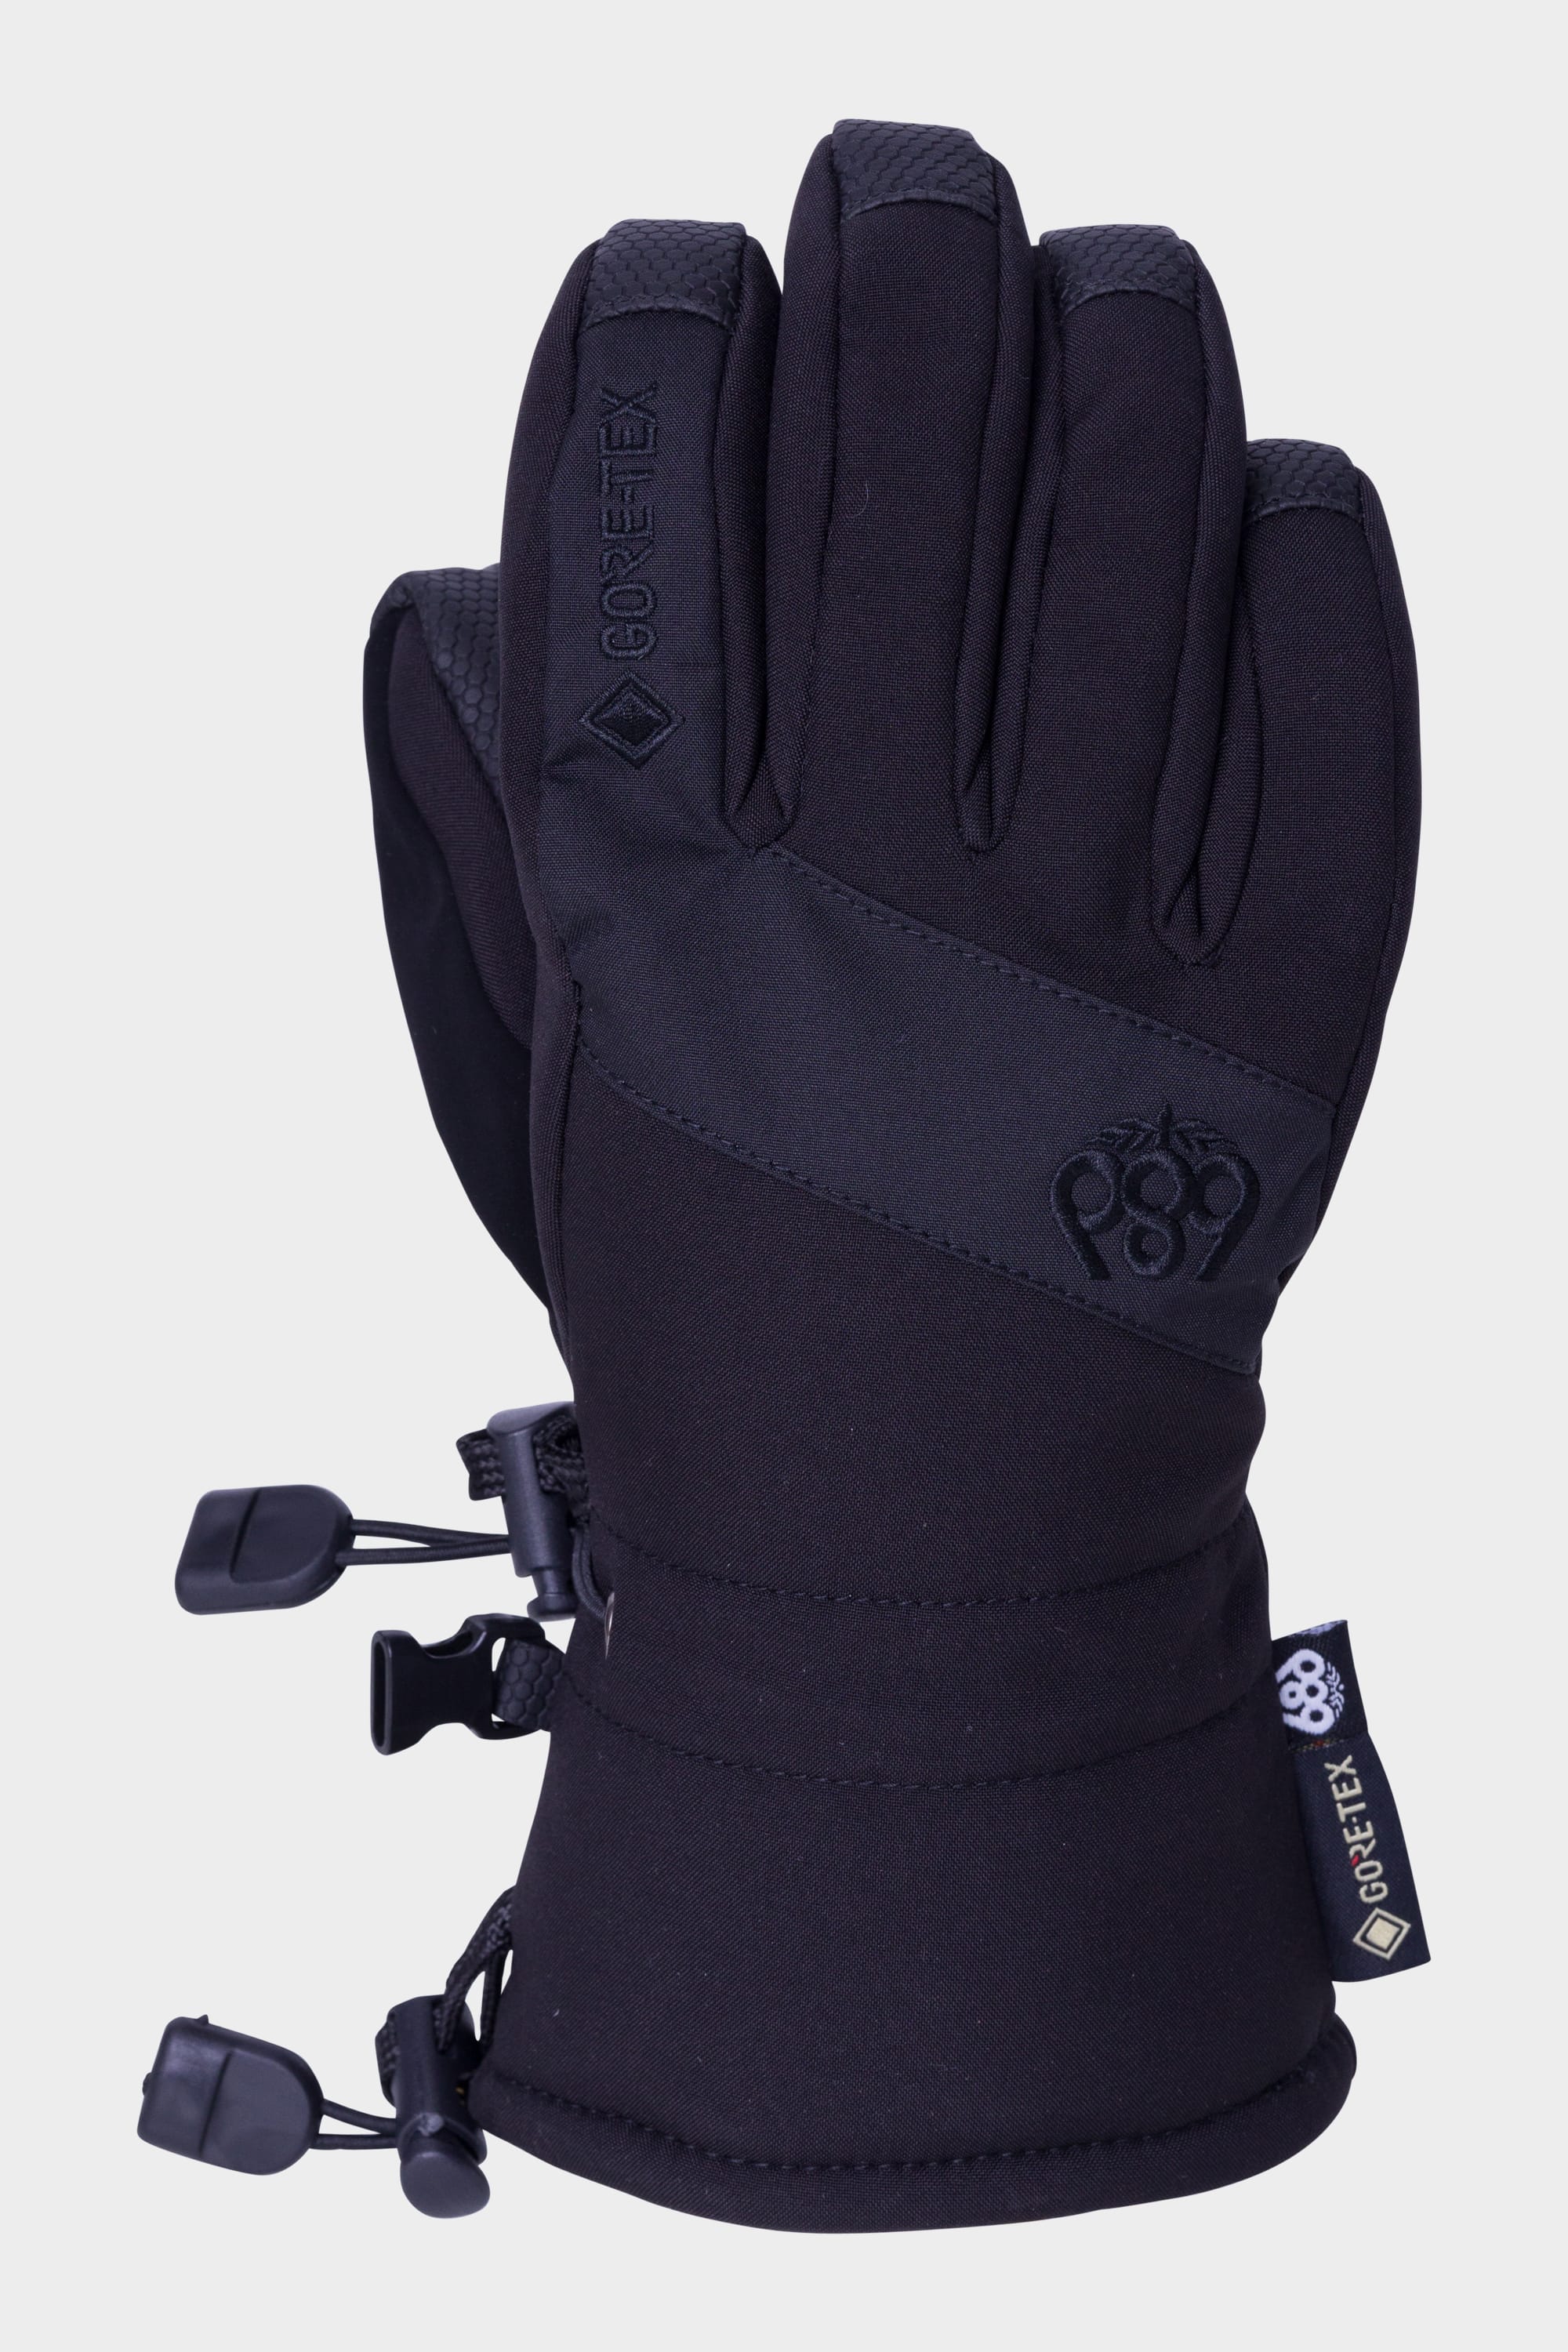 686 Youth GORE-TEX Linear Glove – 686.com